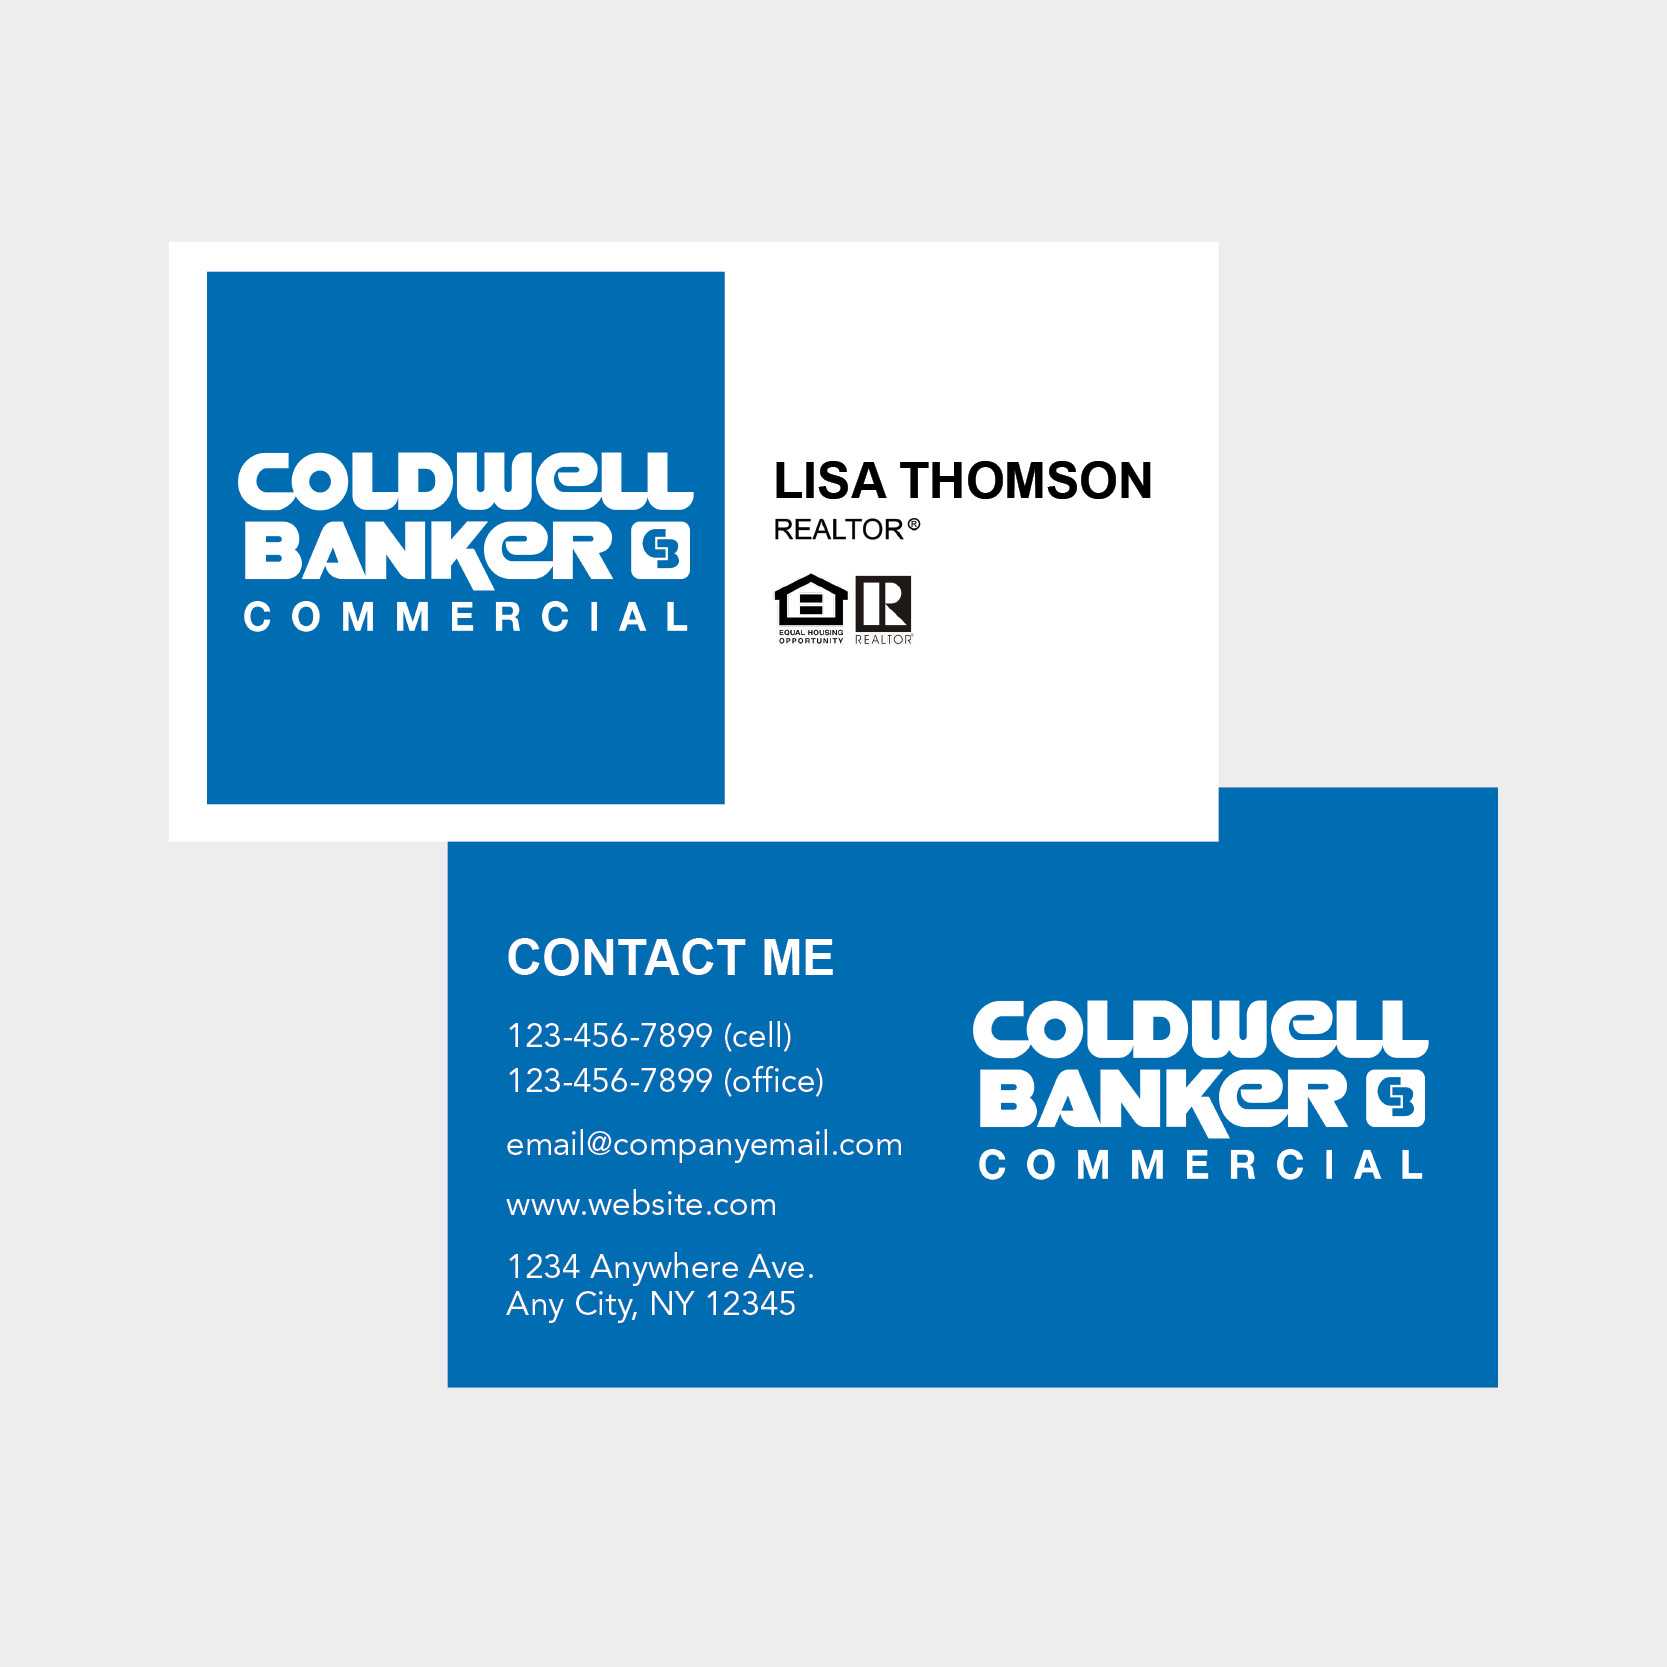 Coldwell Banker Business Card Regarding Coldwell Banker Business Card Template